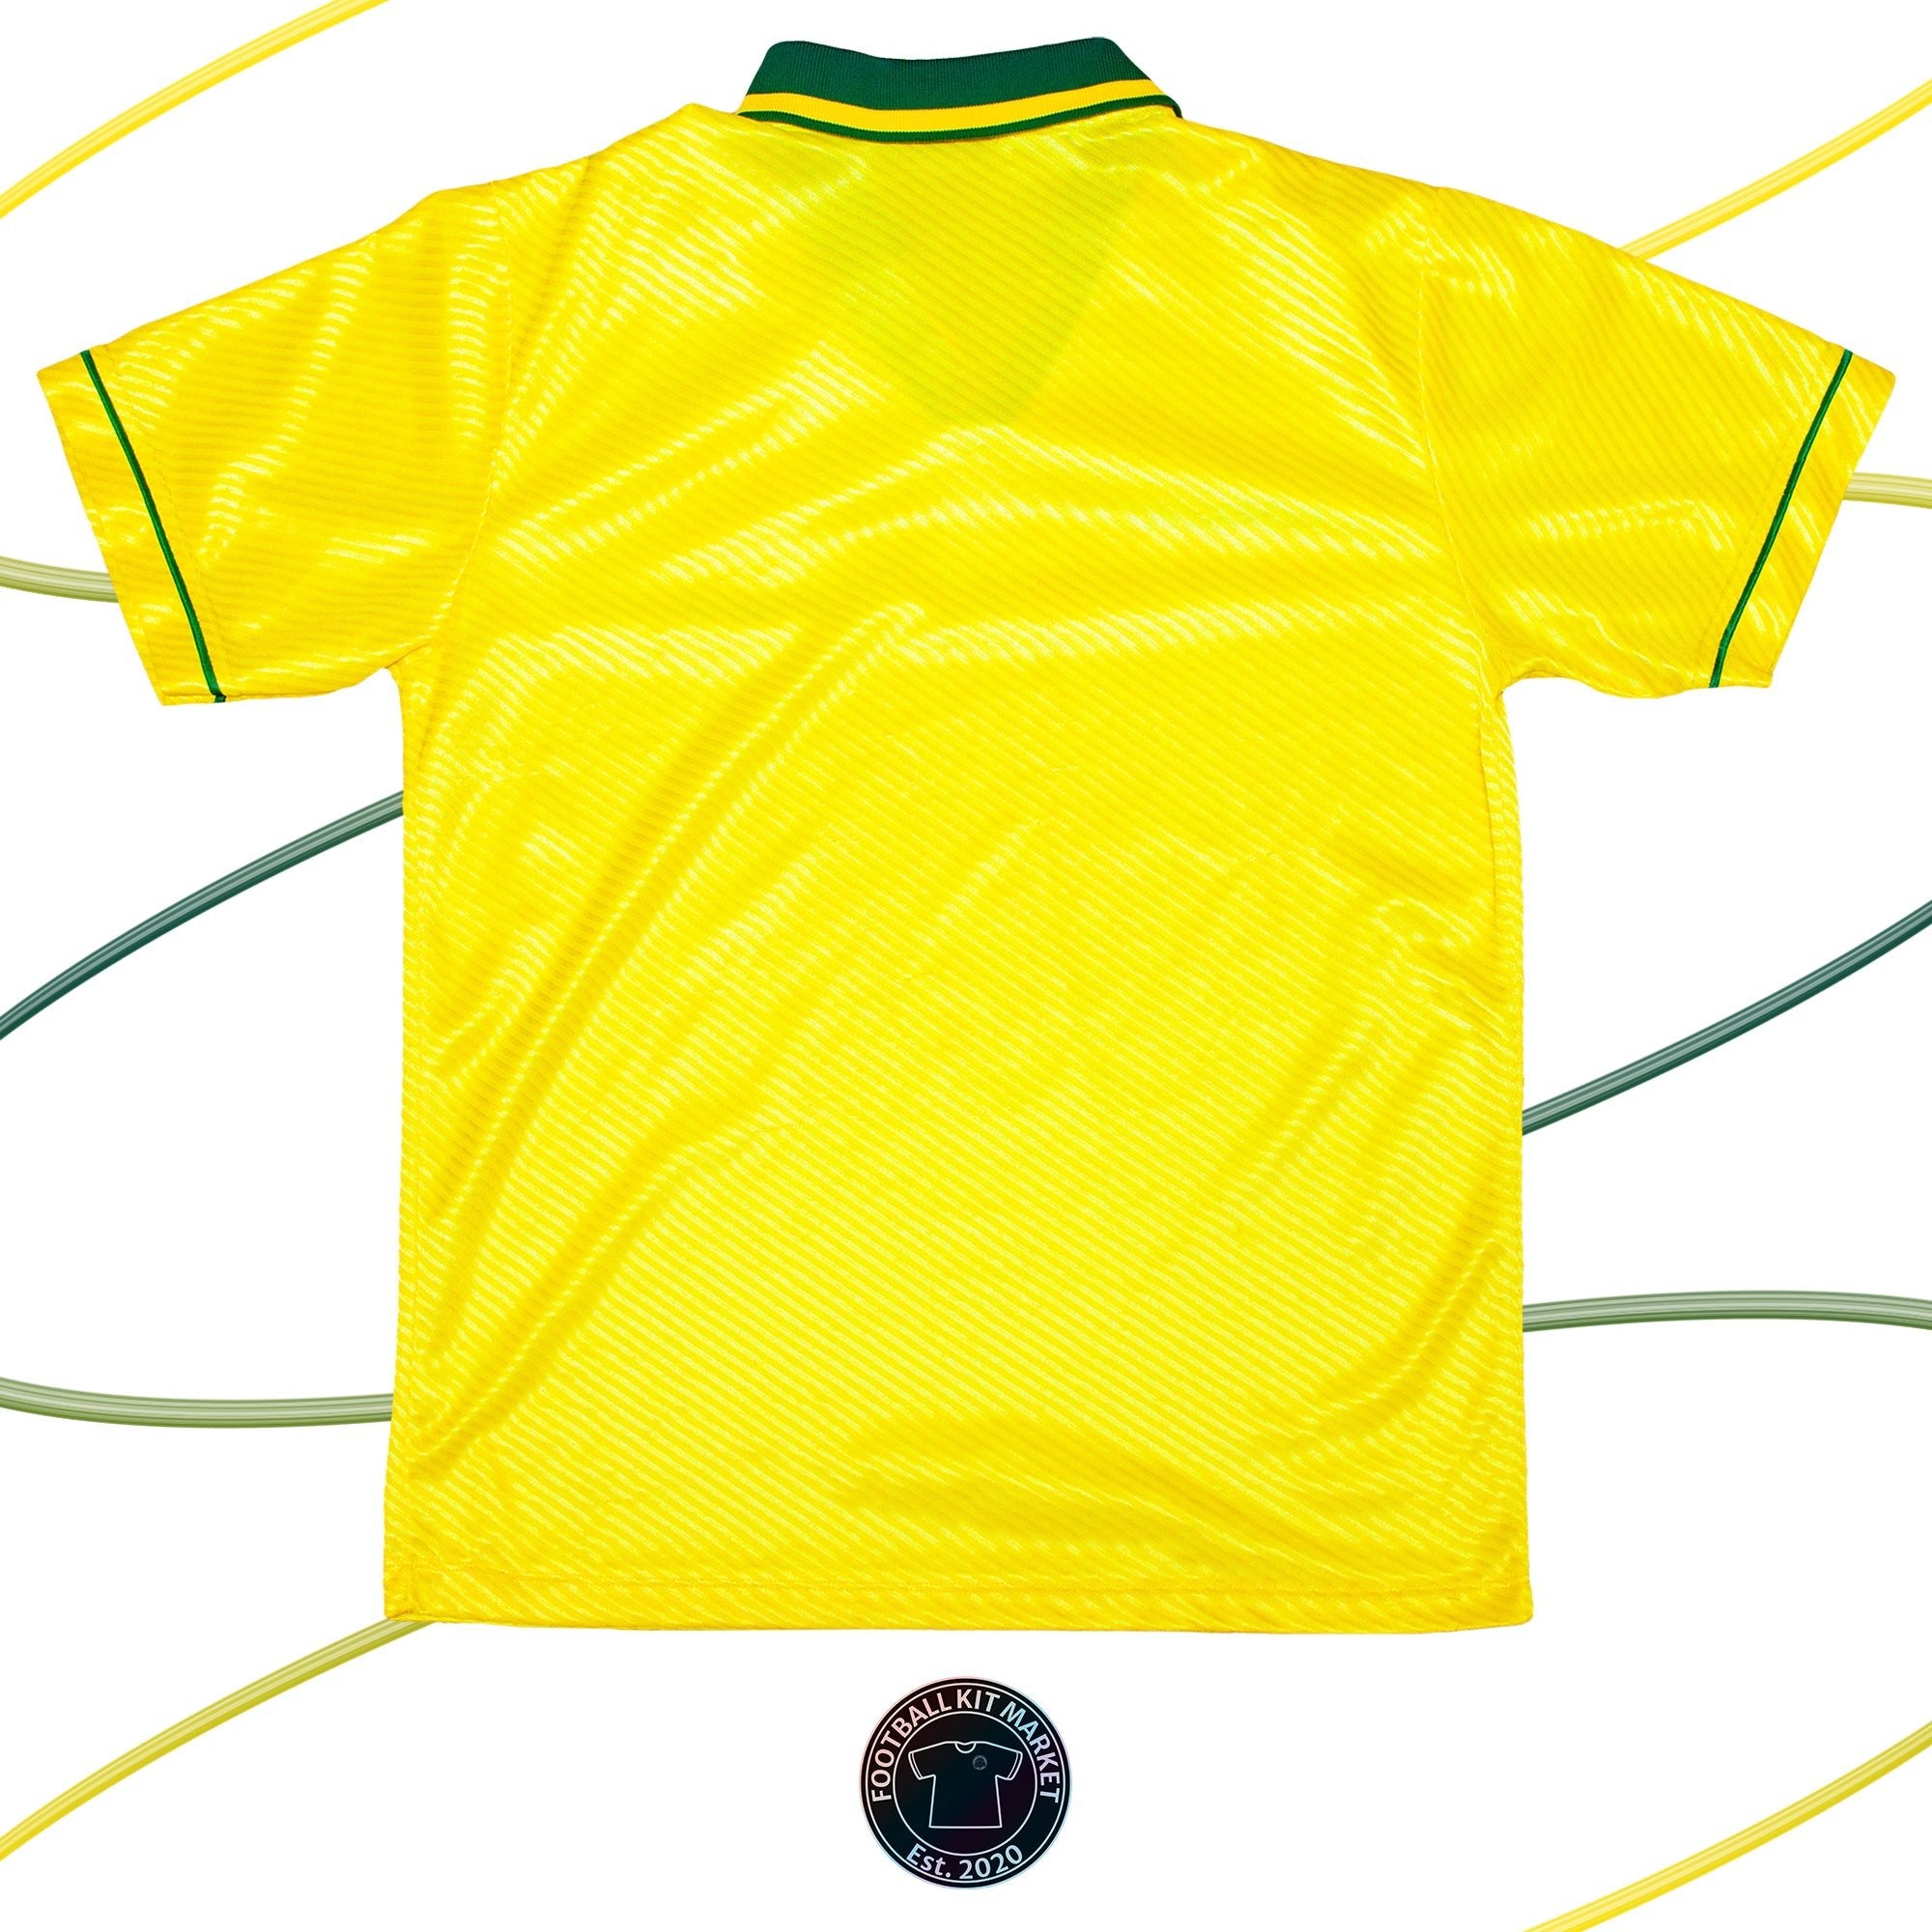 Genuine BRAZIL Home (1994-1995) - UMBRO (L) - Product Image from Football Kit Market